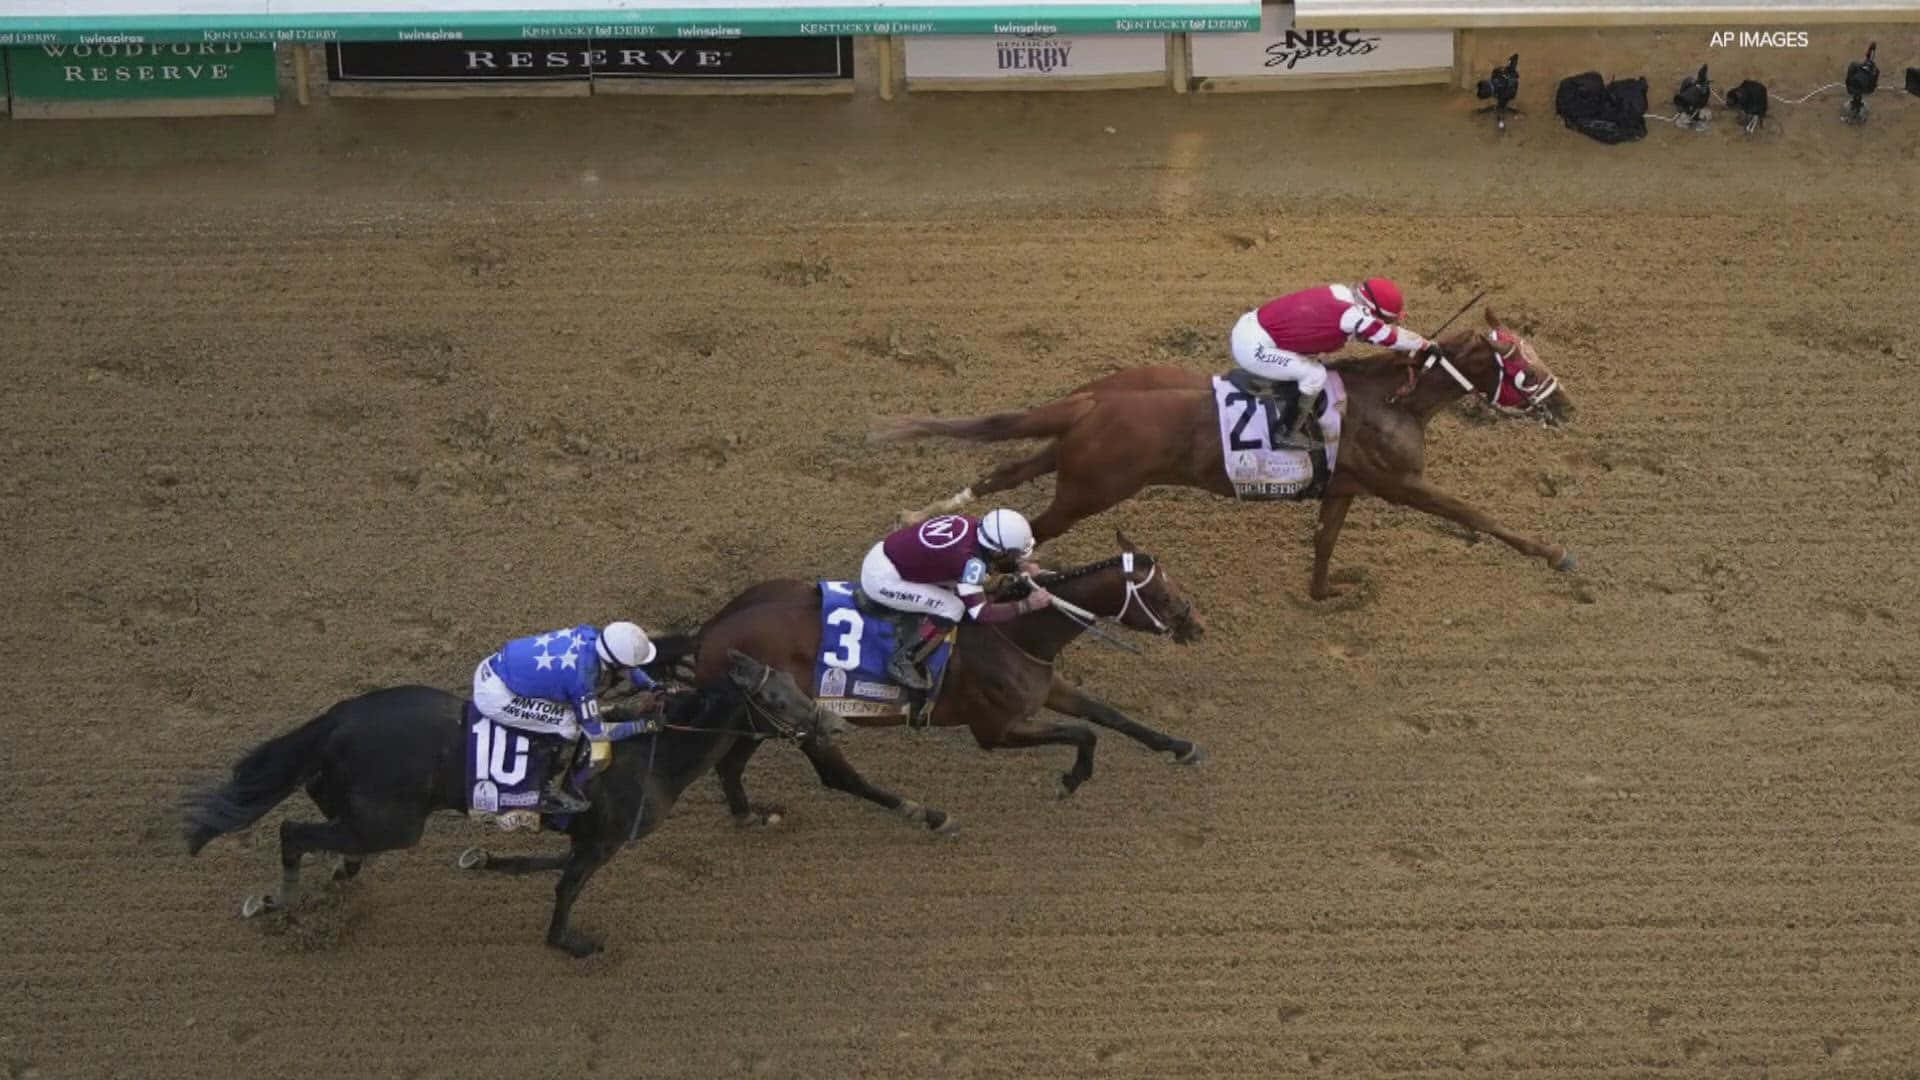 Tre heste konkurrerer på en dirt track